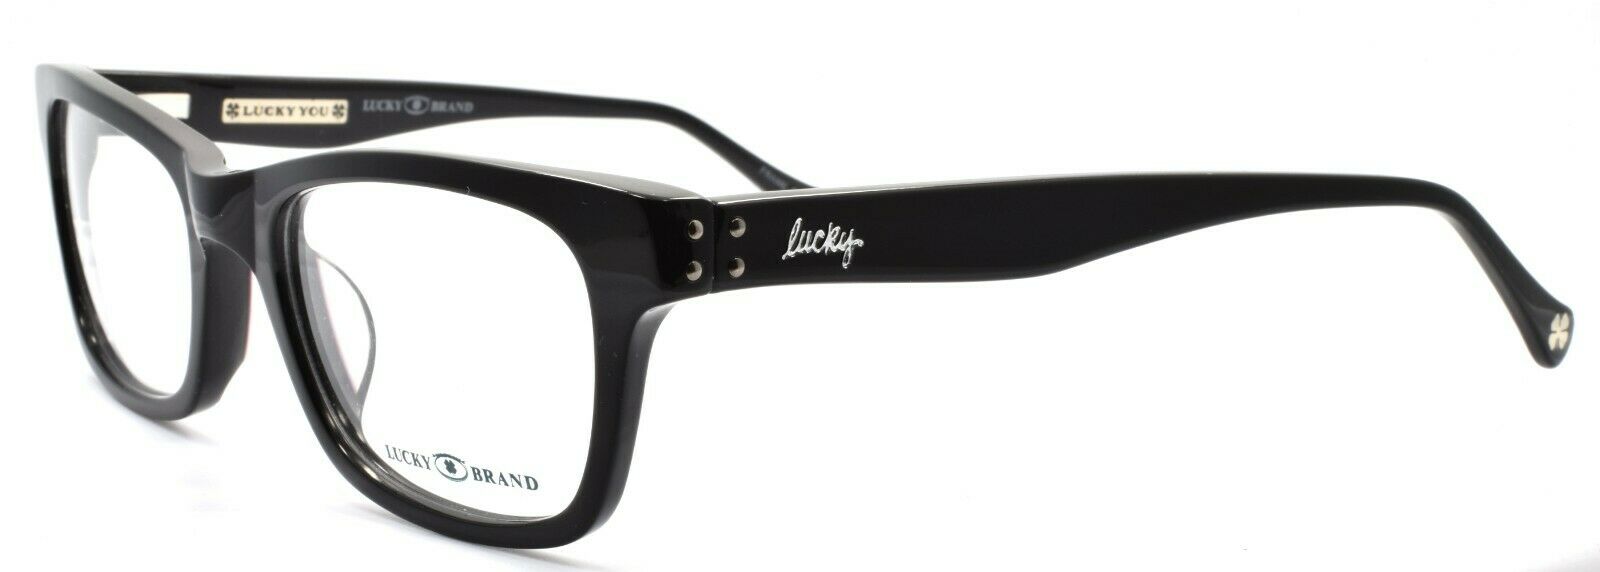 1-LUCKY BRAND Tropic UF Women's Eyeglasses Frames 52-20-140 Black + CASE-751286247978-IKSpecs